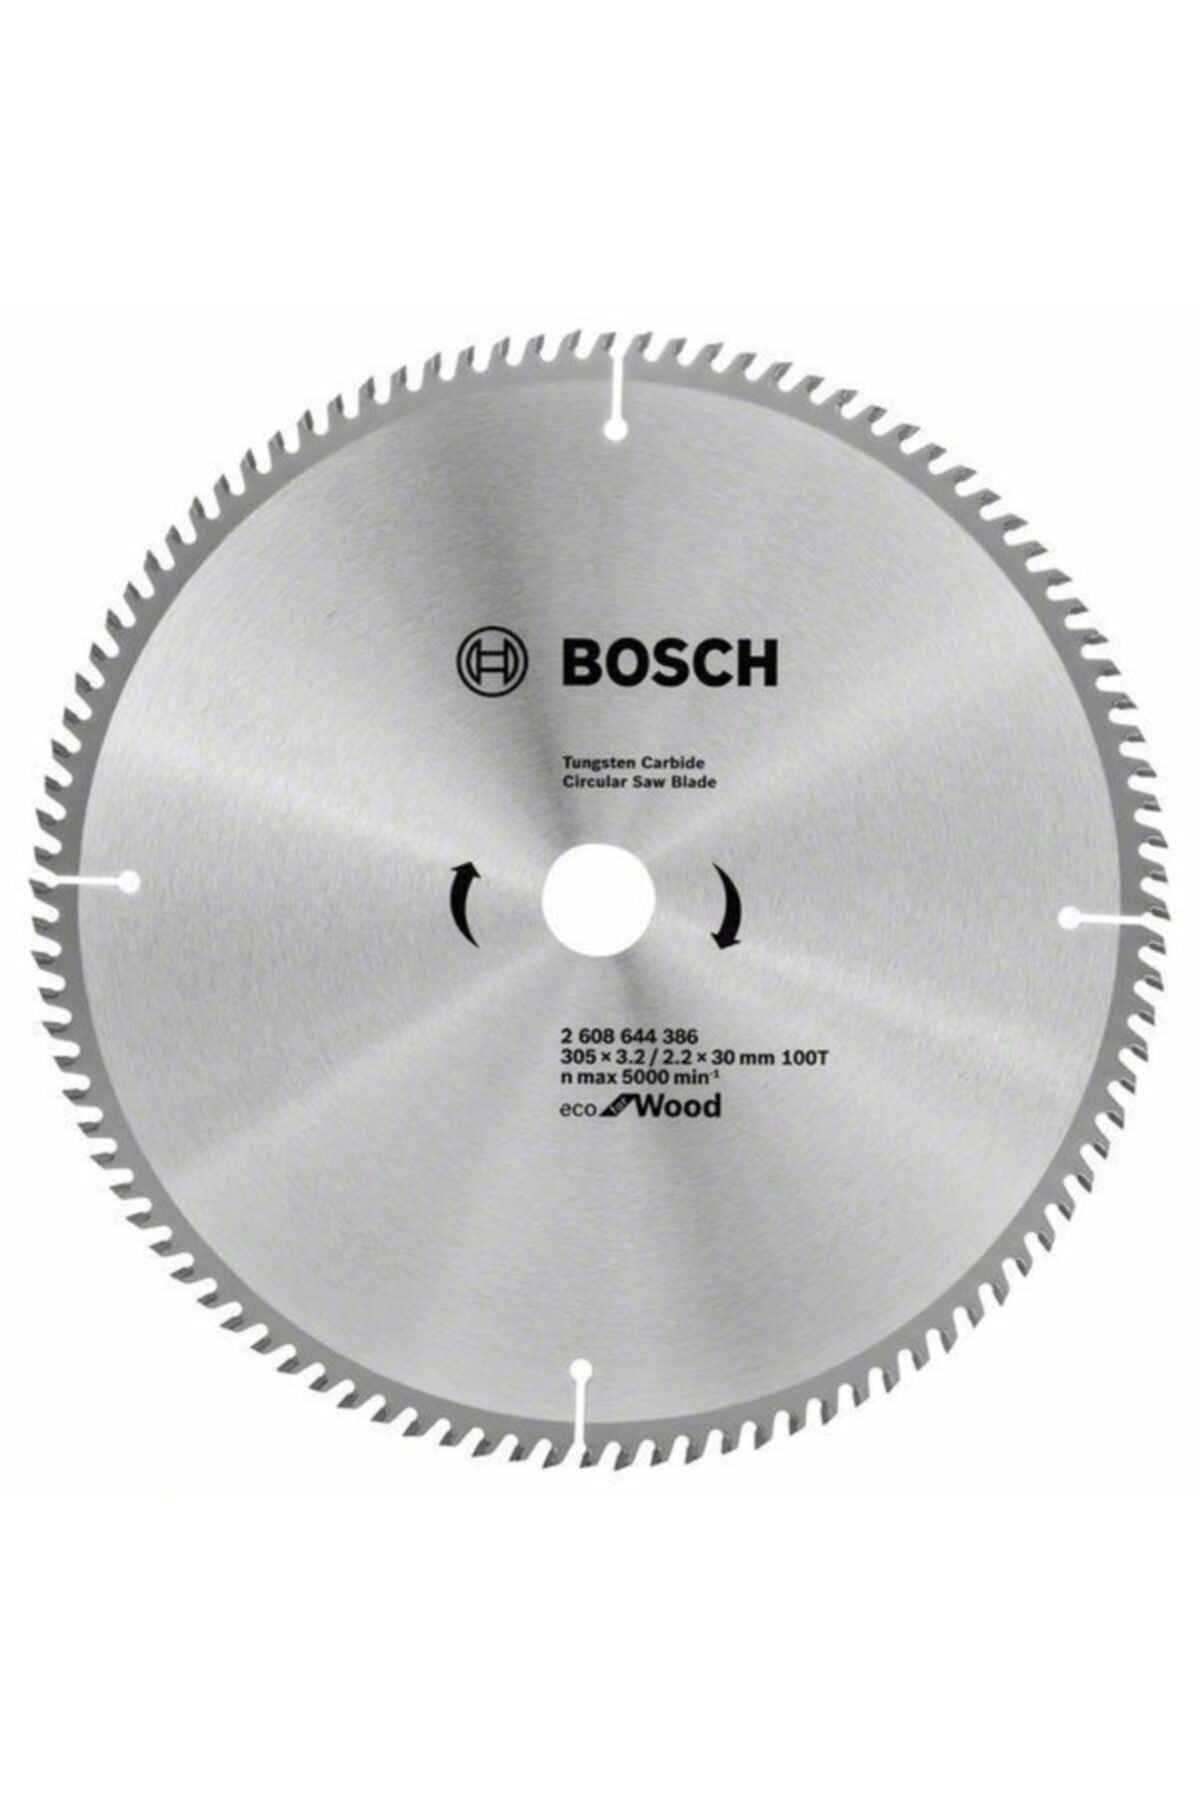 Bosch Optiline Eco 305x30 100 Diş Daire Mdf Sunta Ahşap Kesme Daire Testere Bıçağı 305x3,2/2,2x30mm